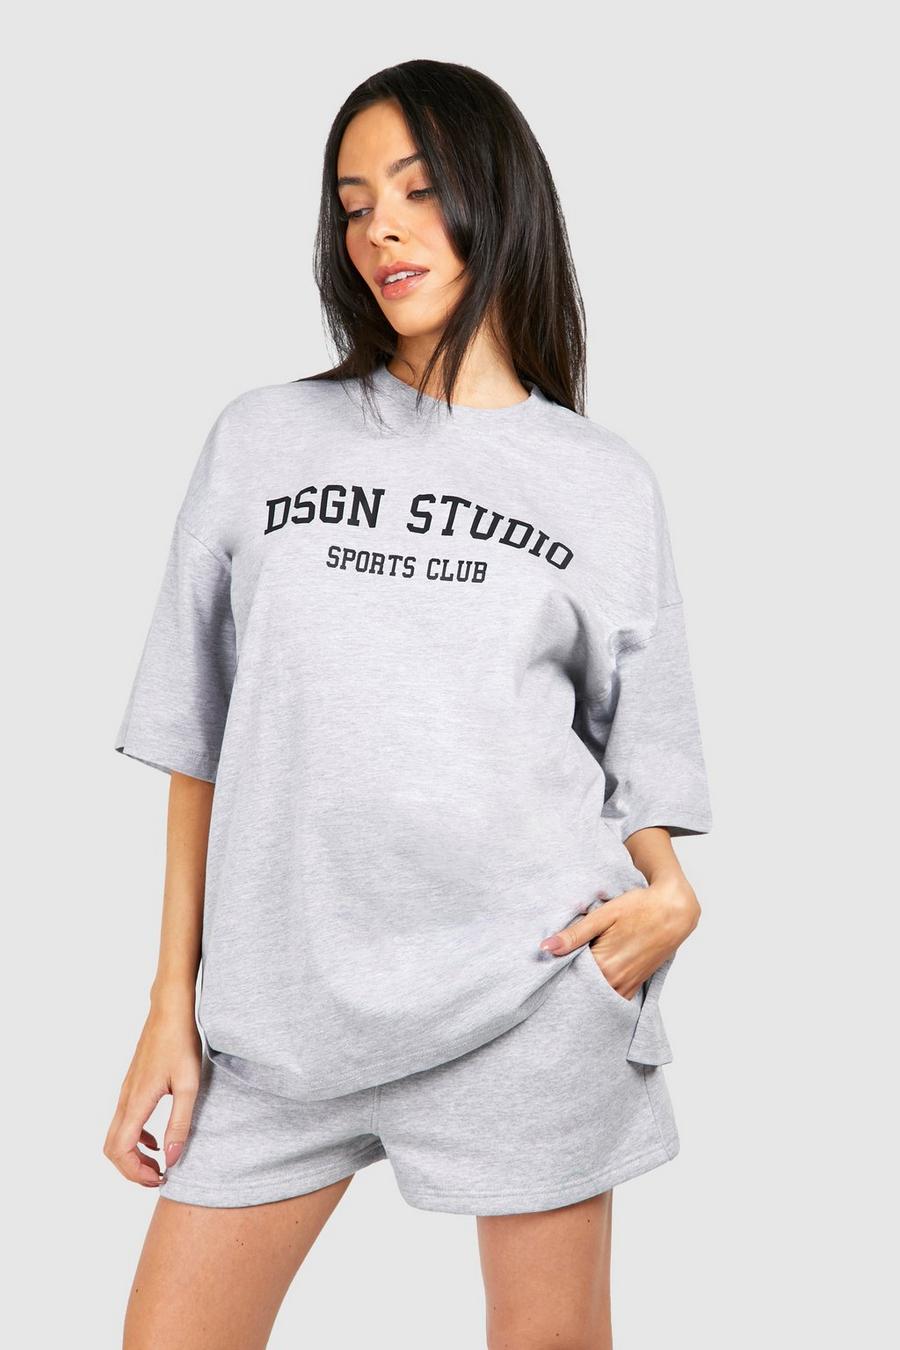 T-shirt Premaman oversize con stampa Dsgn Studio, Grey marl